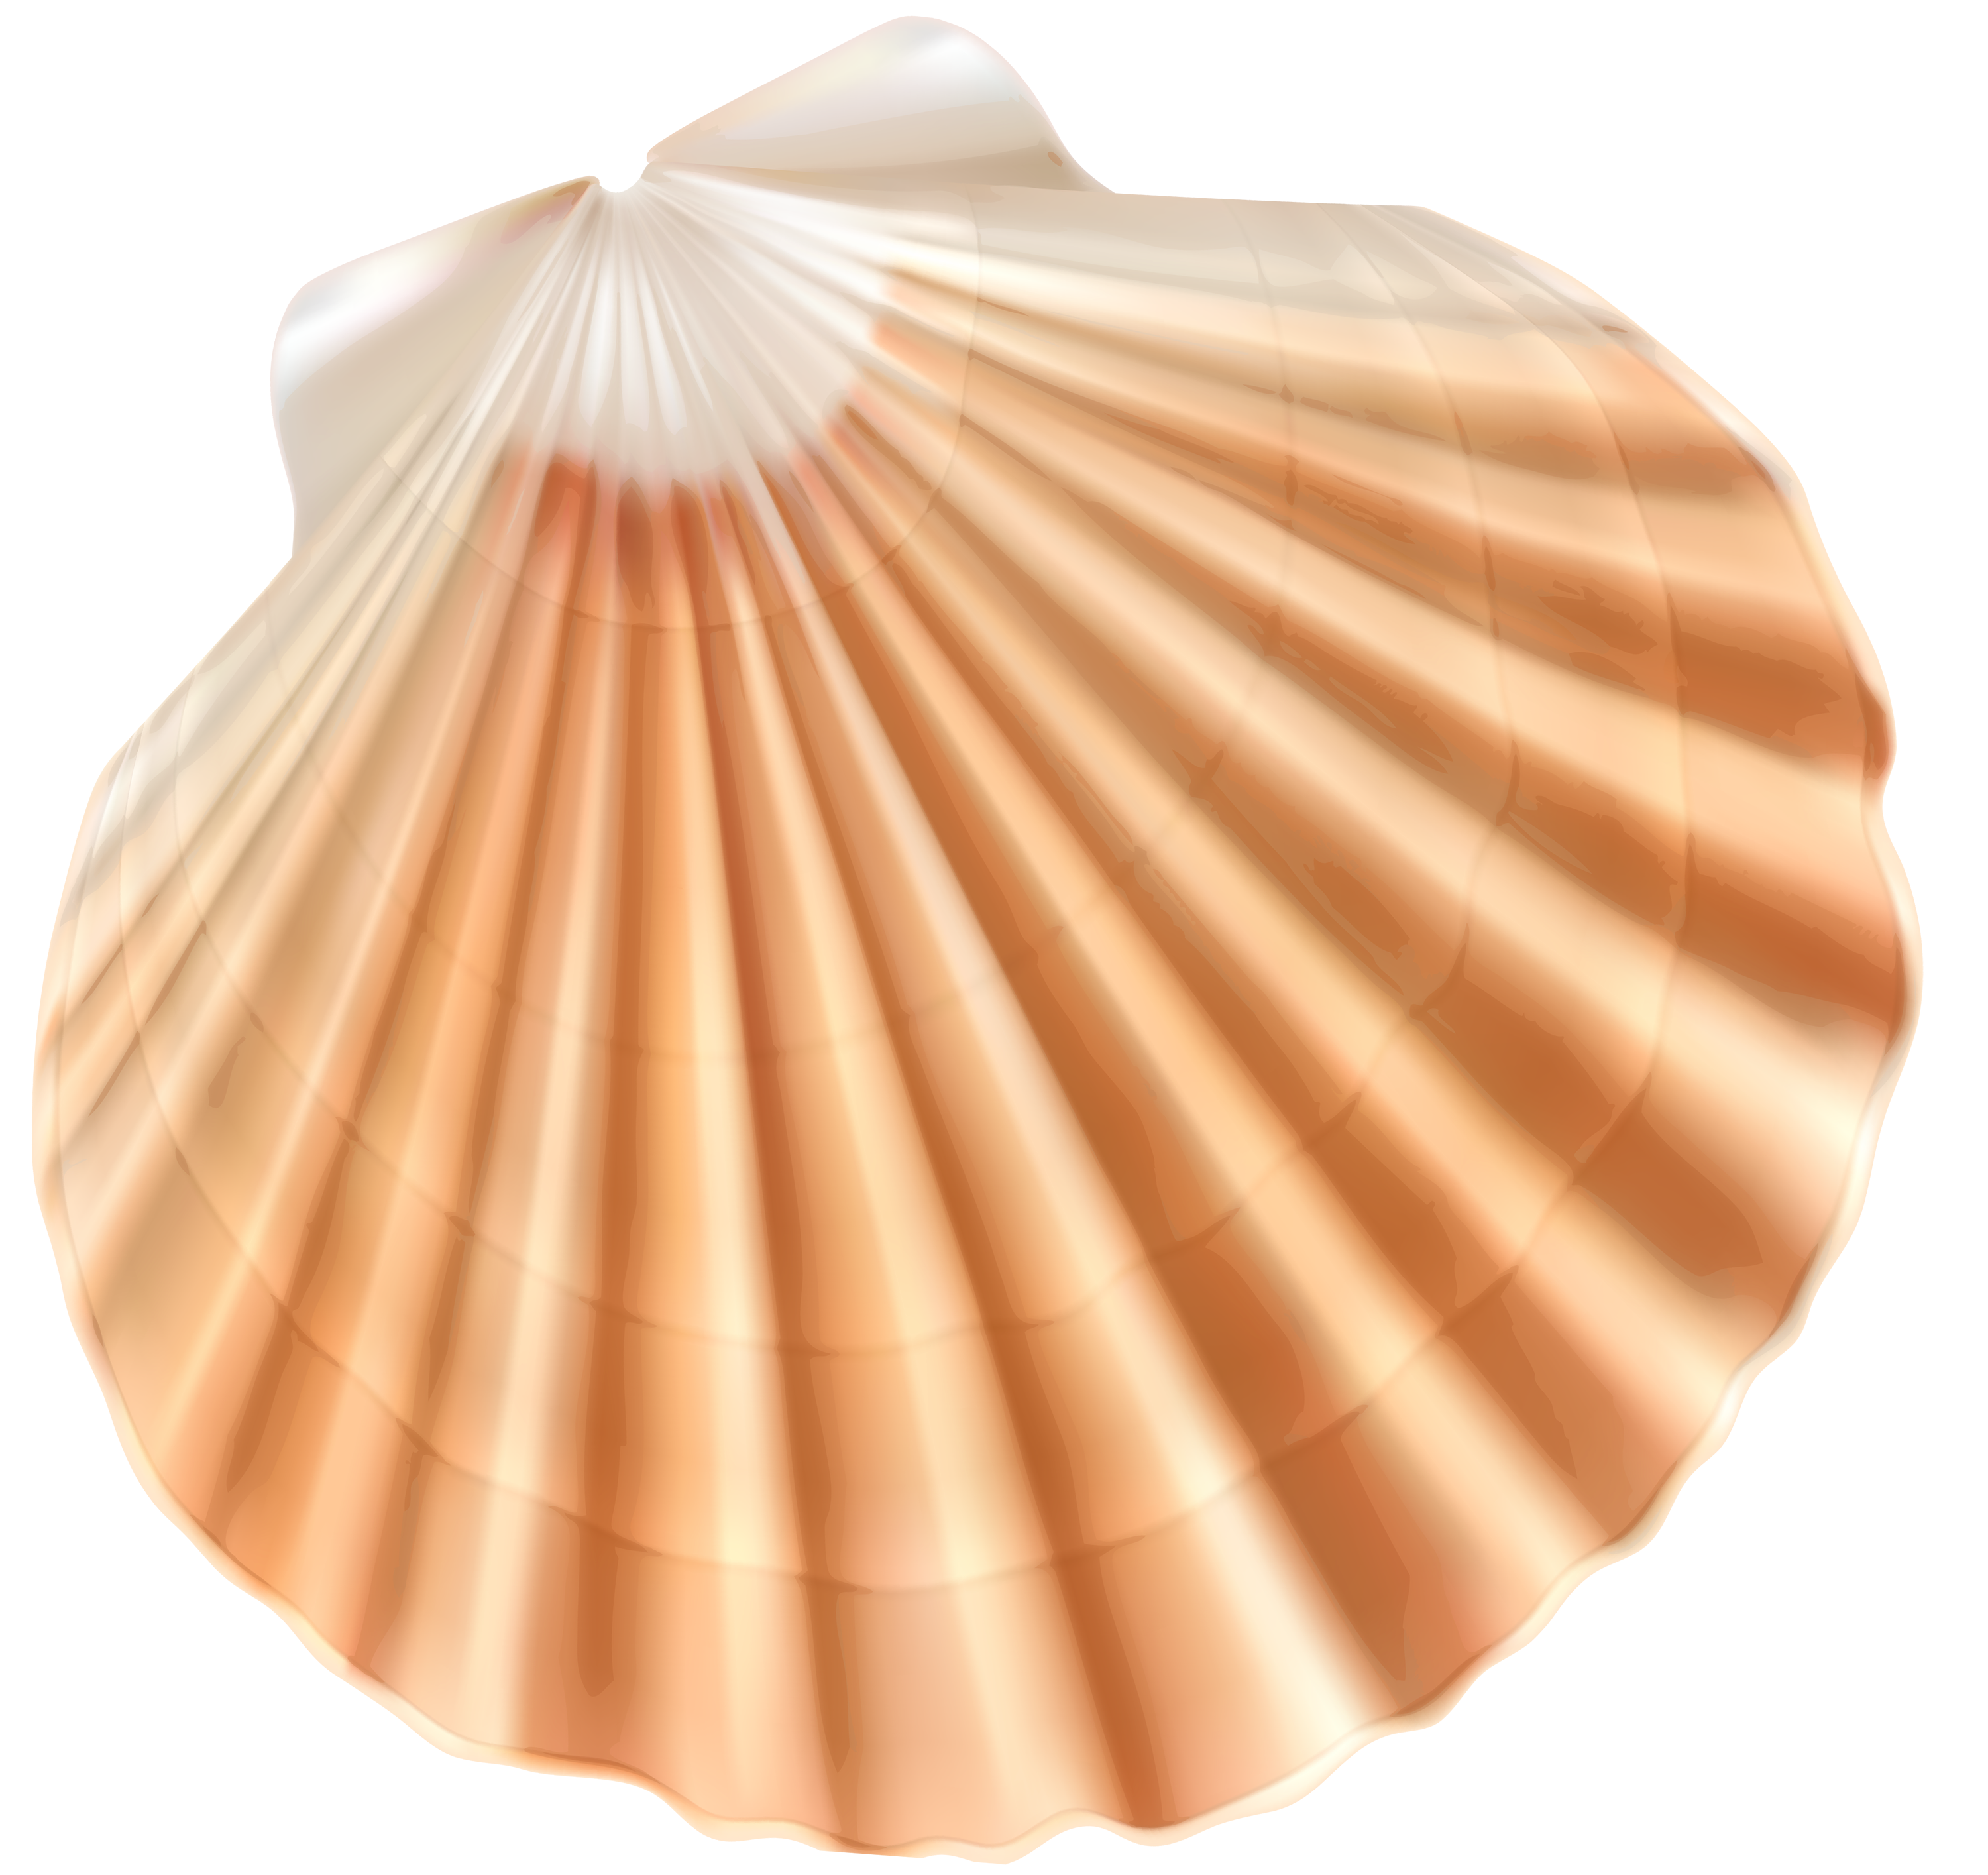 Sea shell photo